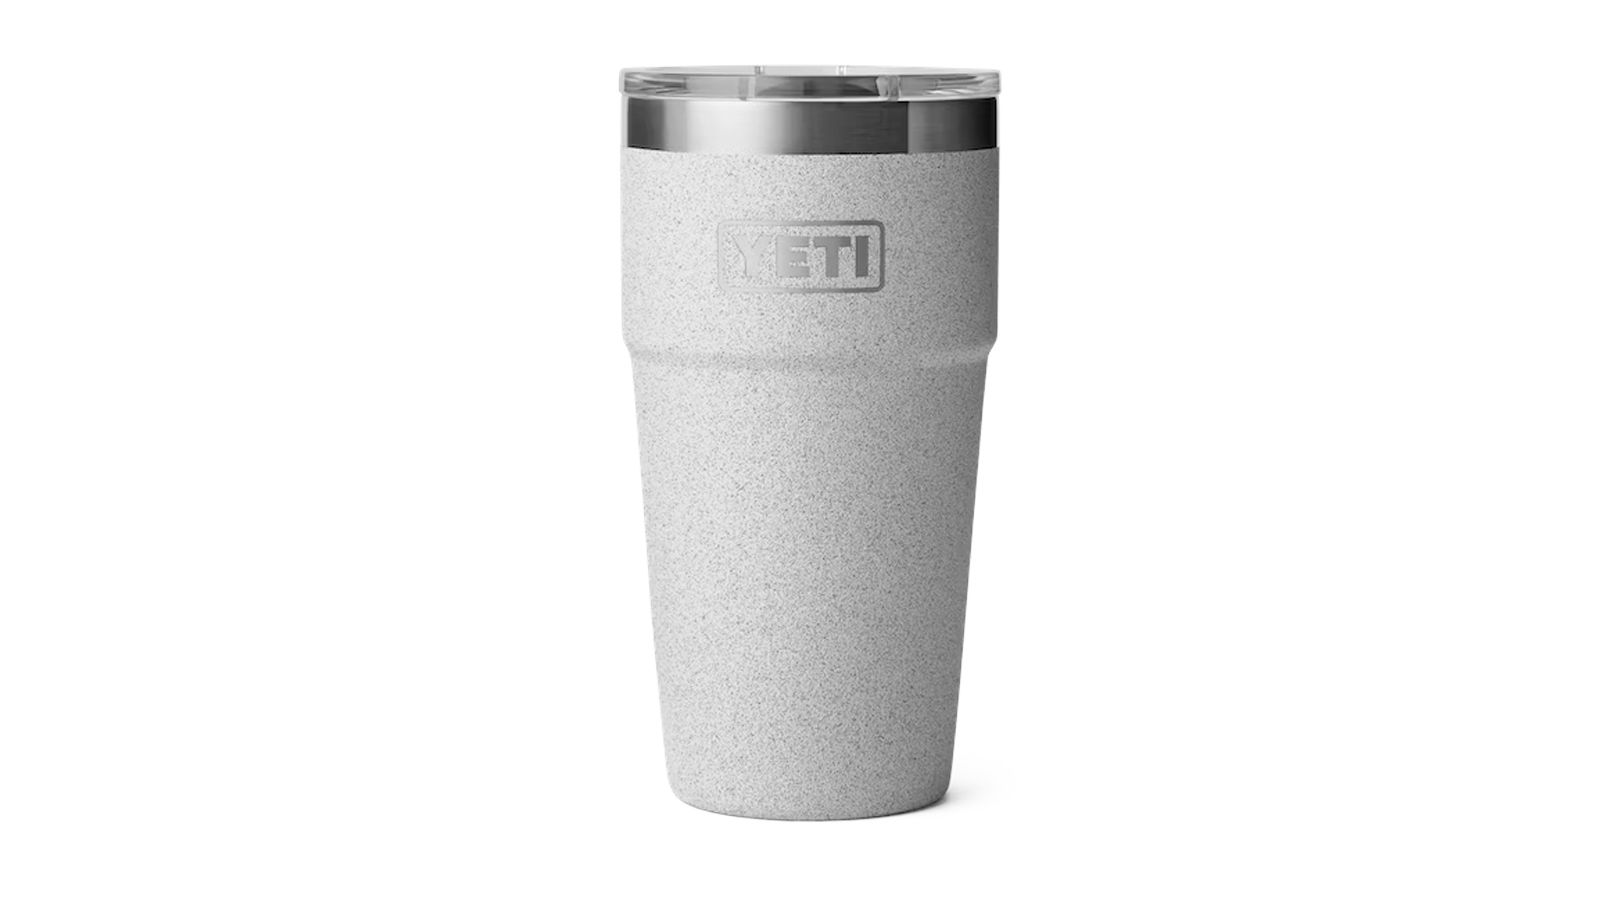 https://media.cnn.com/api/v1/images/stellar/prod/yeti-stackable-cup-gritstone-cnnu.jpg?c=original